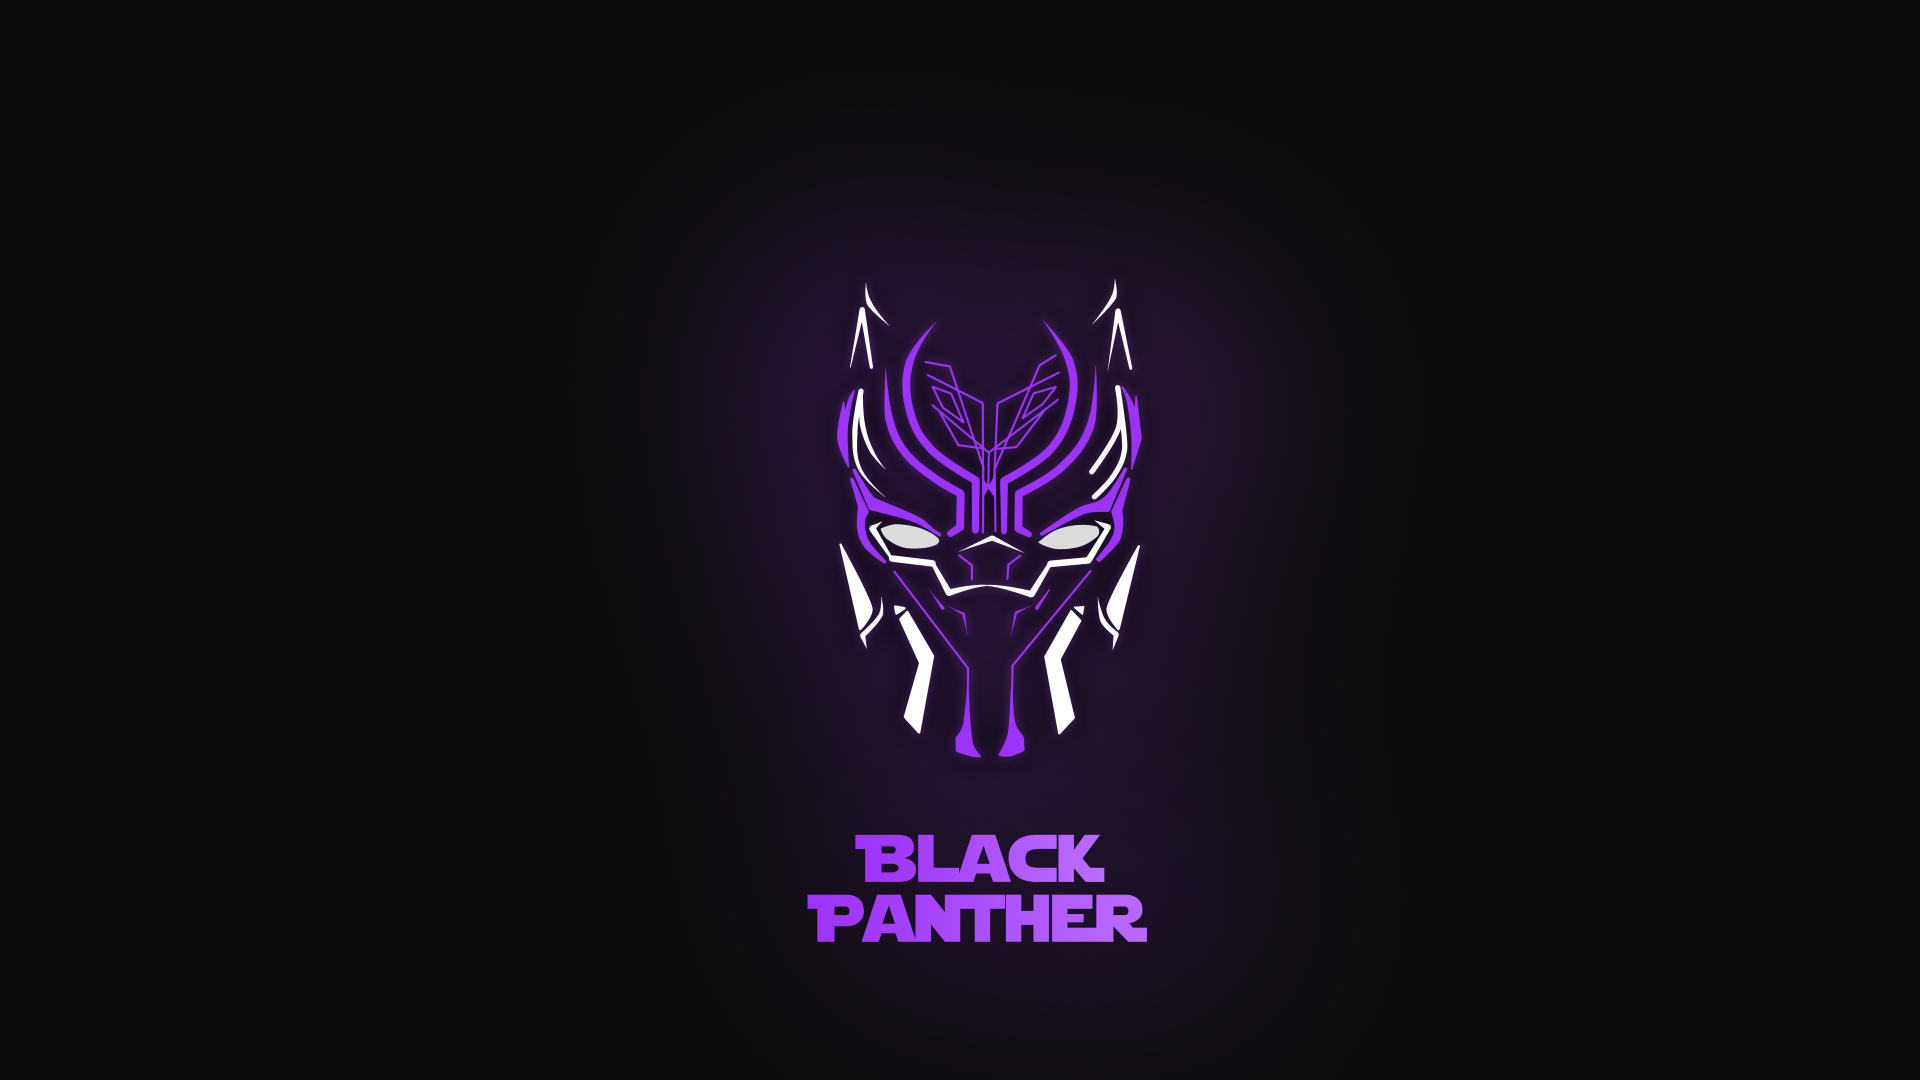 Download wallpaper of Black Panther, Purple, Dark background